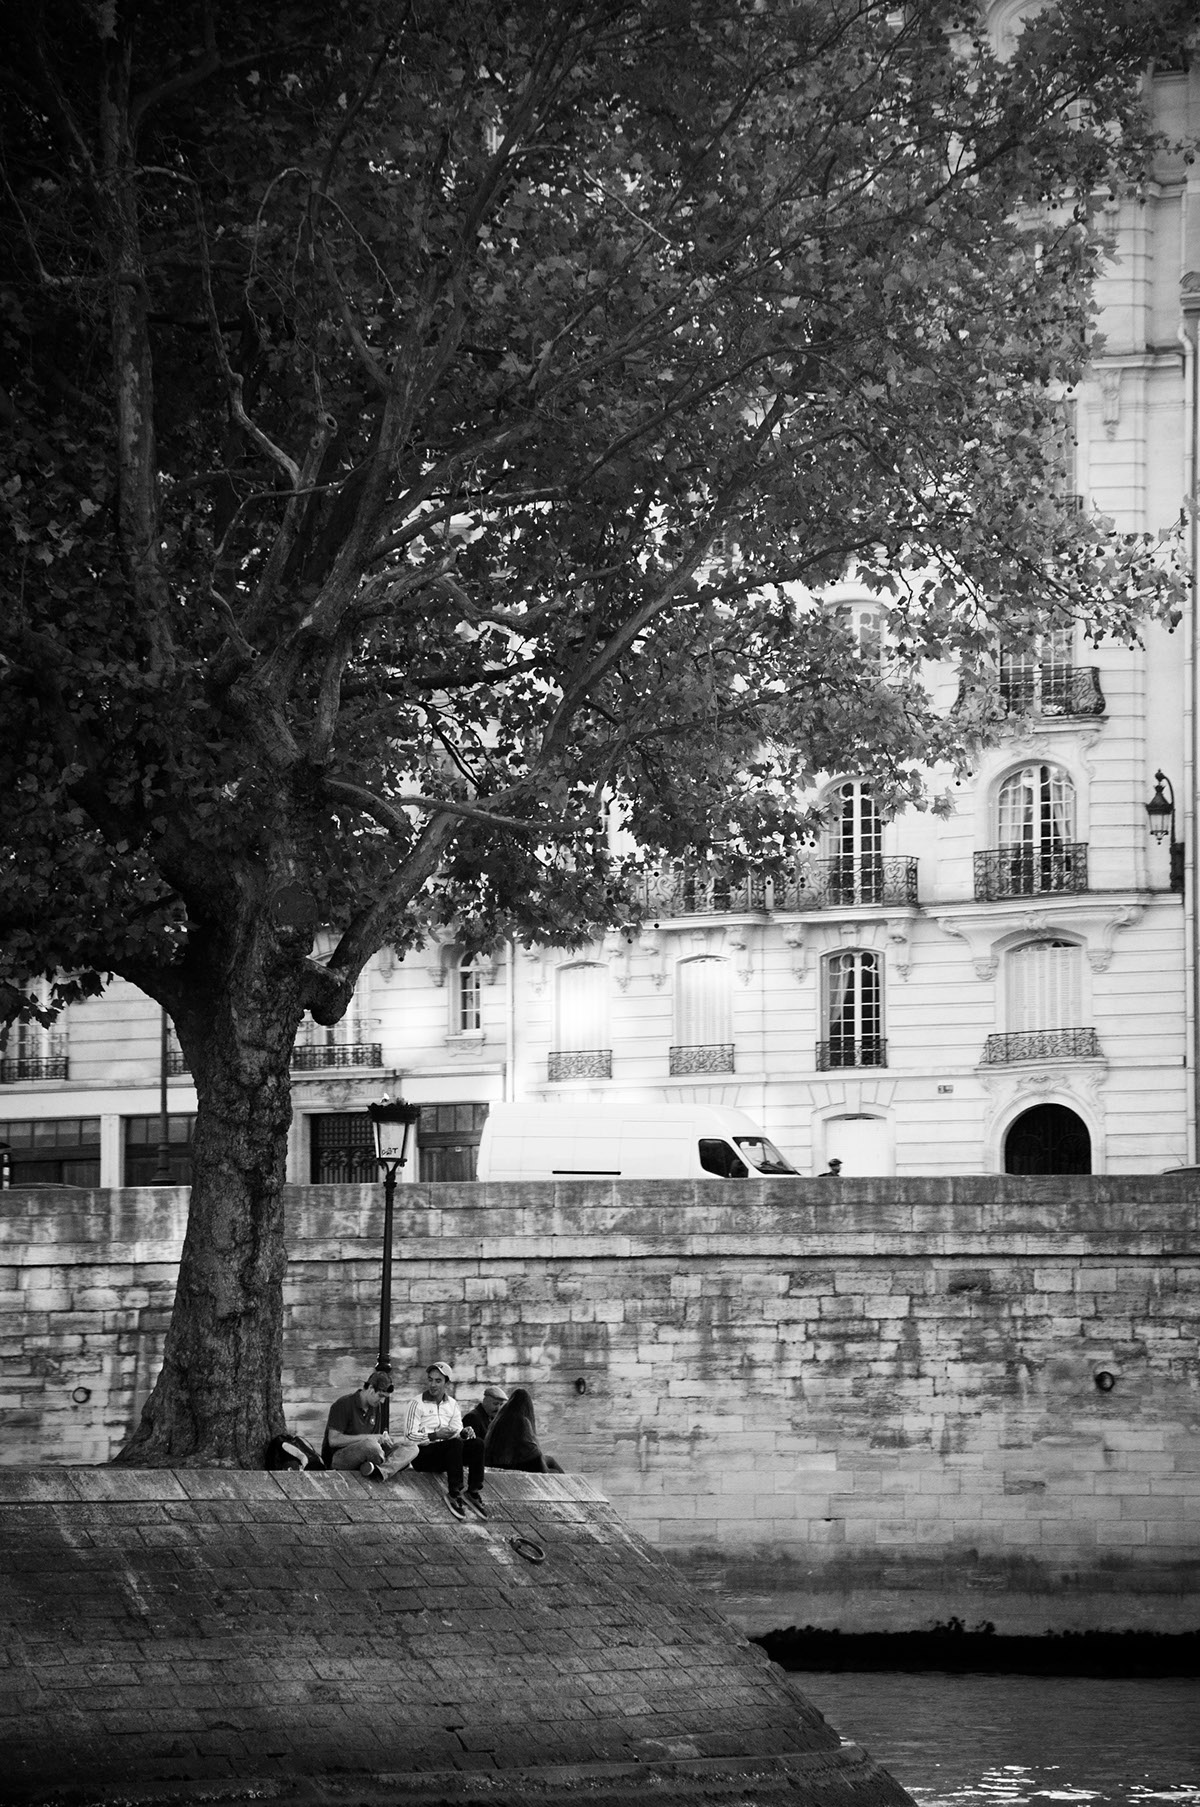 Paris sofia hassan  Street Photography city people buildings monuments